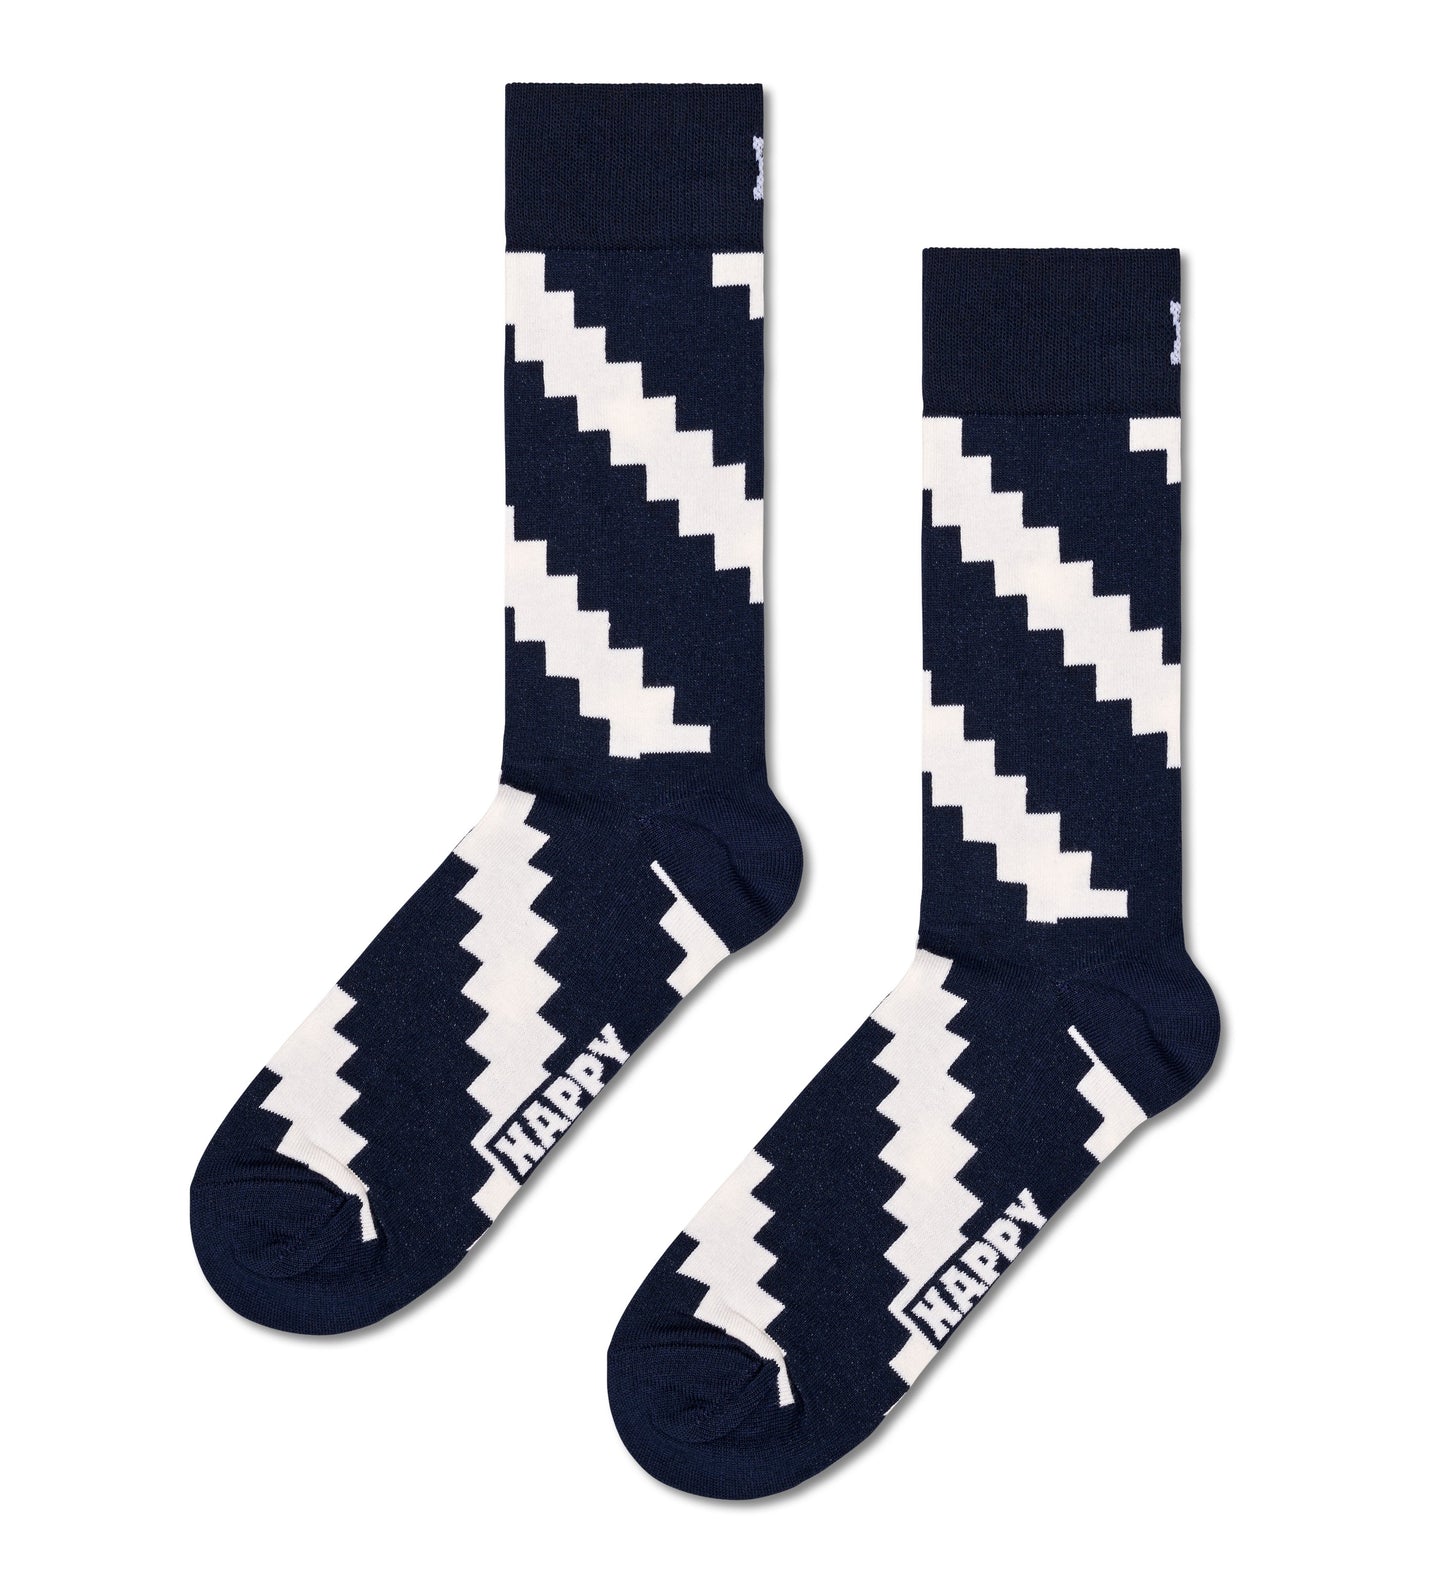 4-Pack Moody Blues Socks Gift Set (41-46)